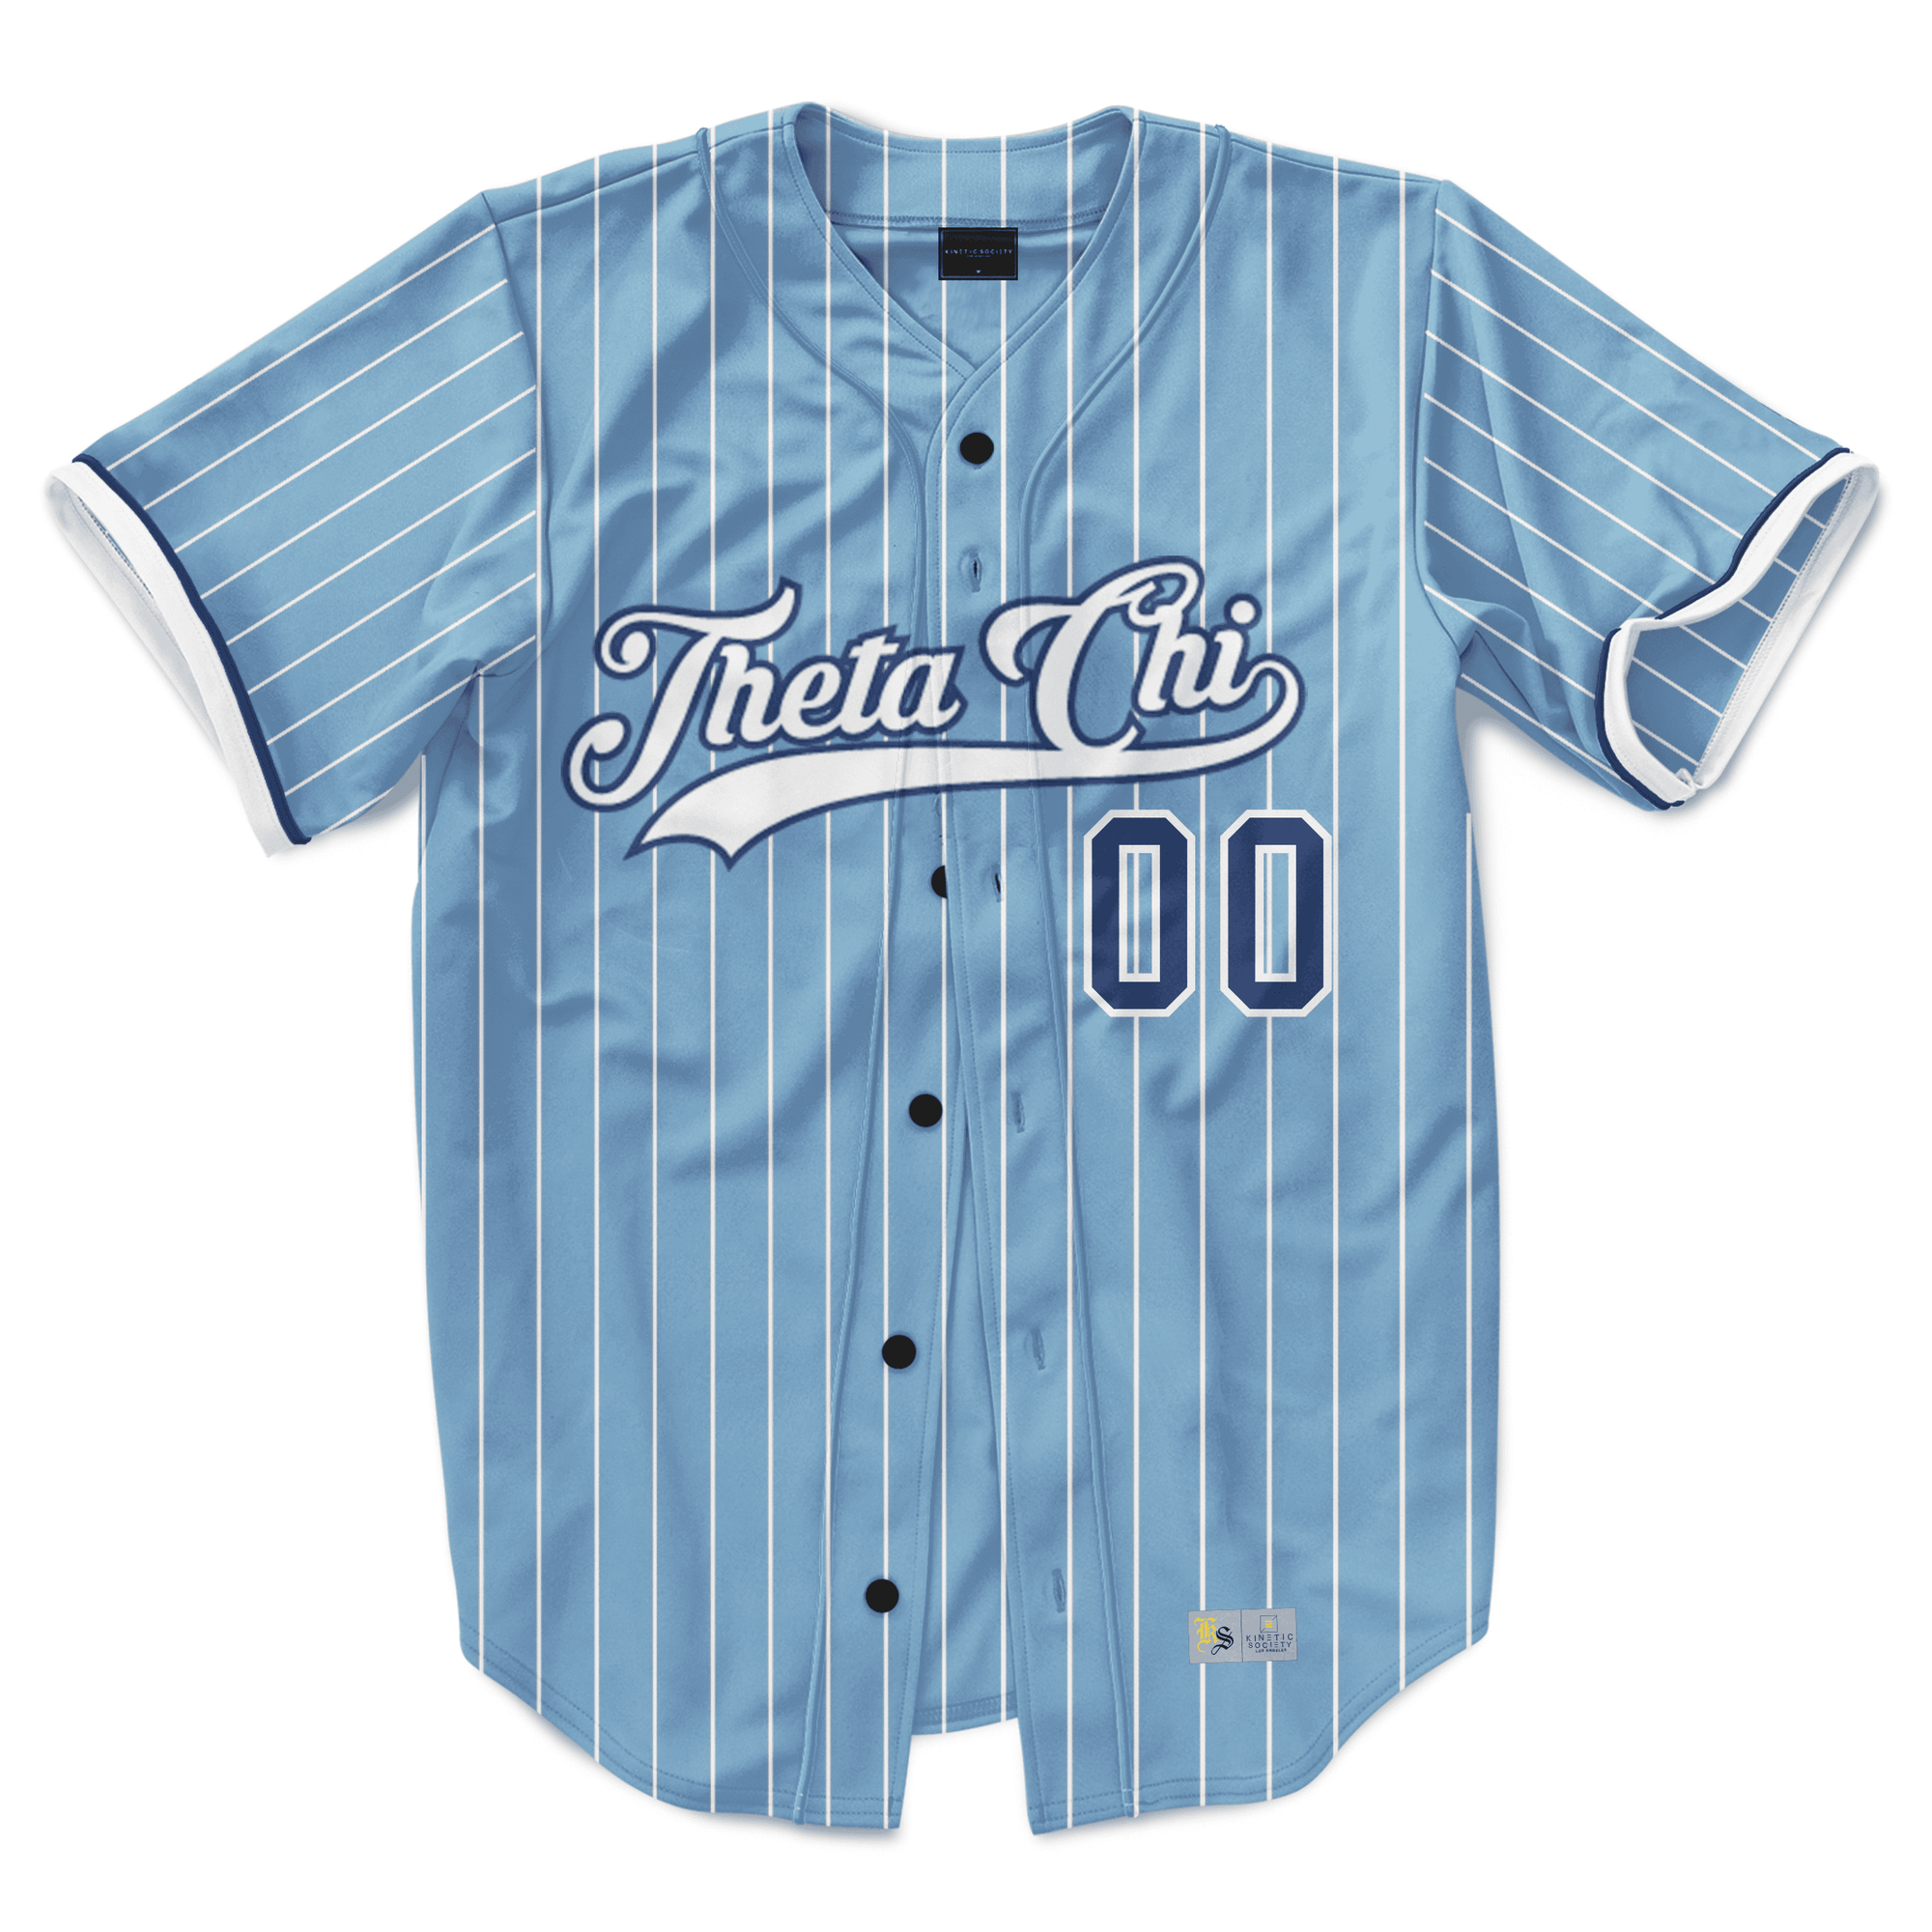 Theta Chi - Blue Shade Baseball Jersey